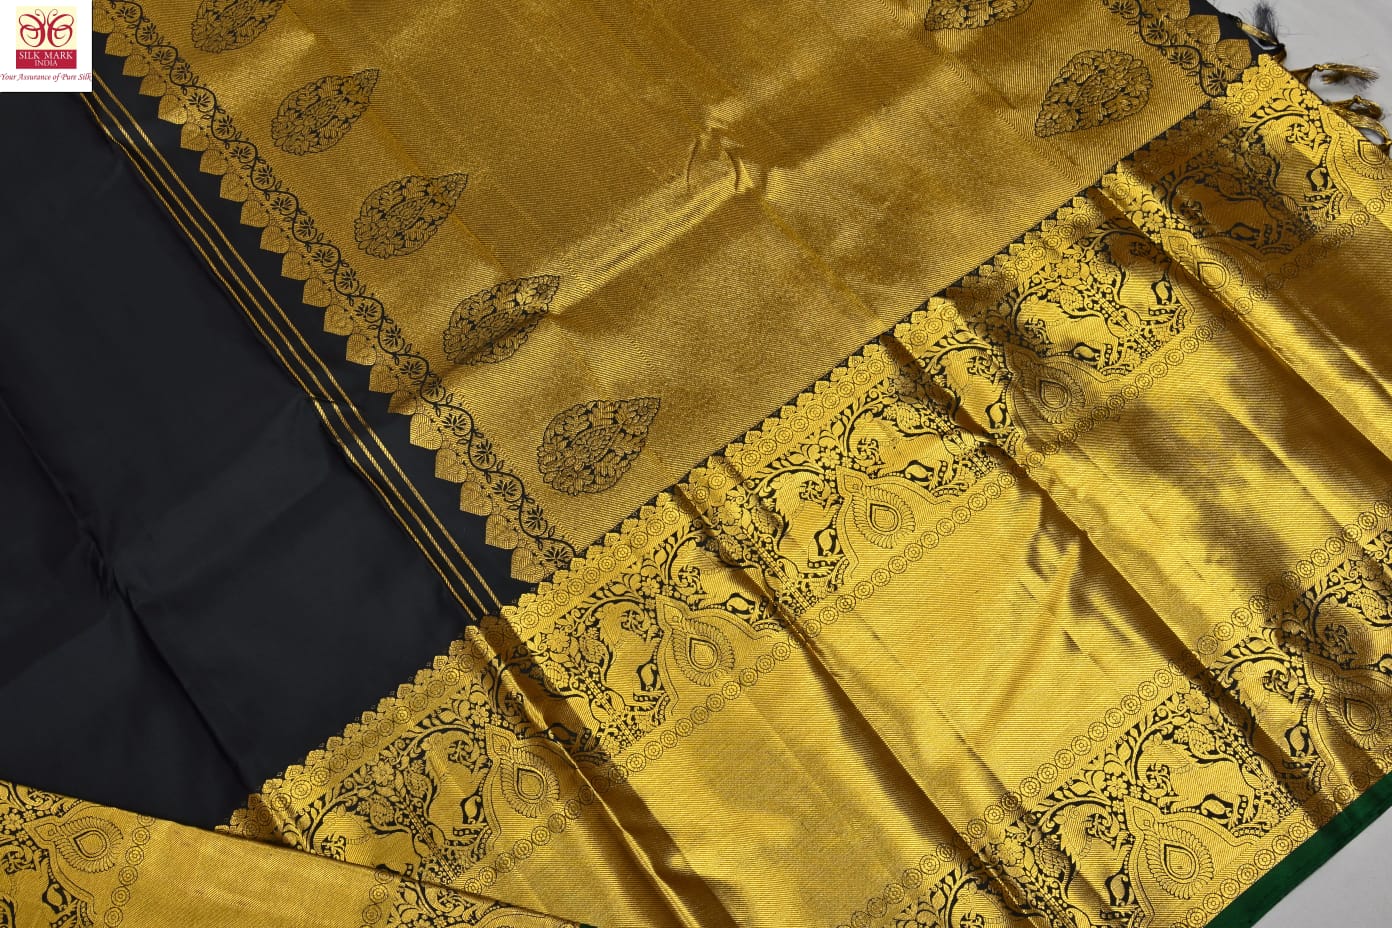 Pure silk kanchipuram black color plain saree